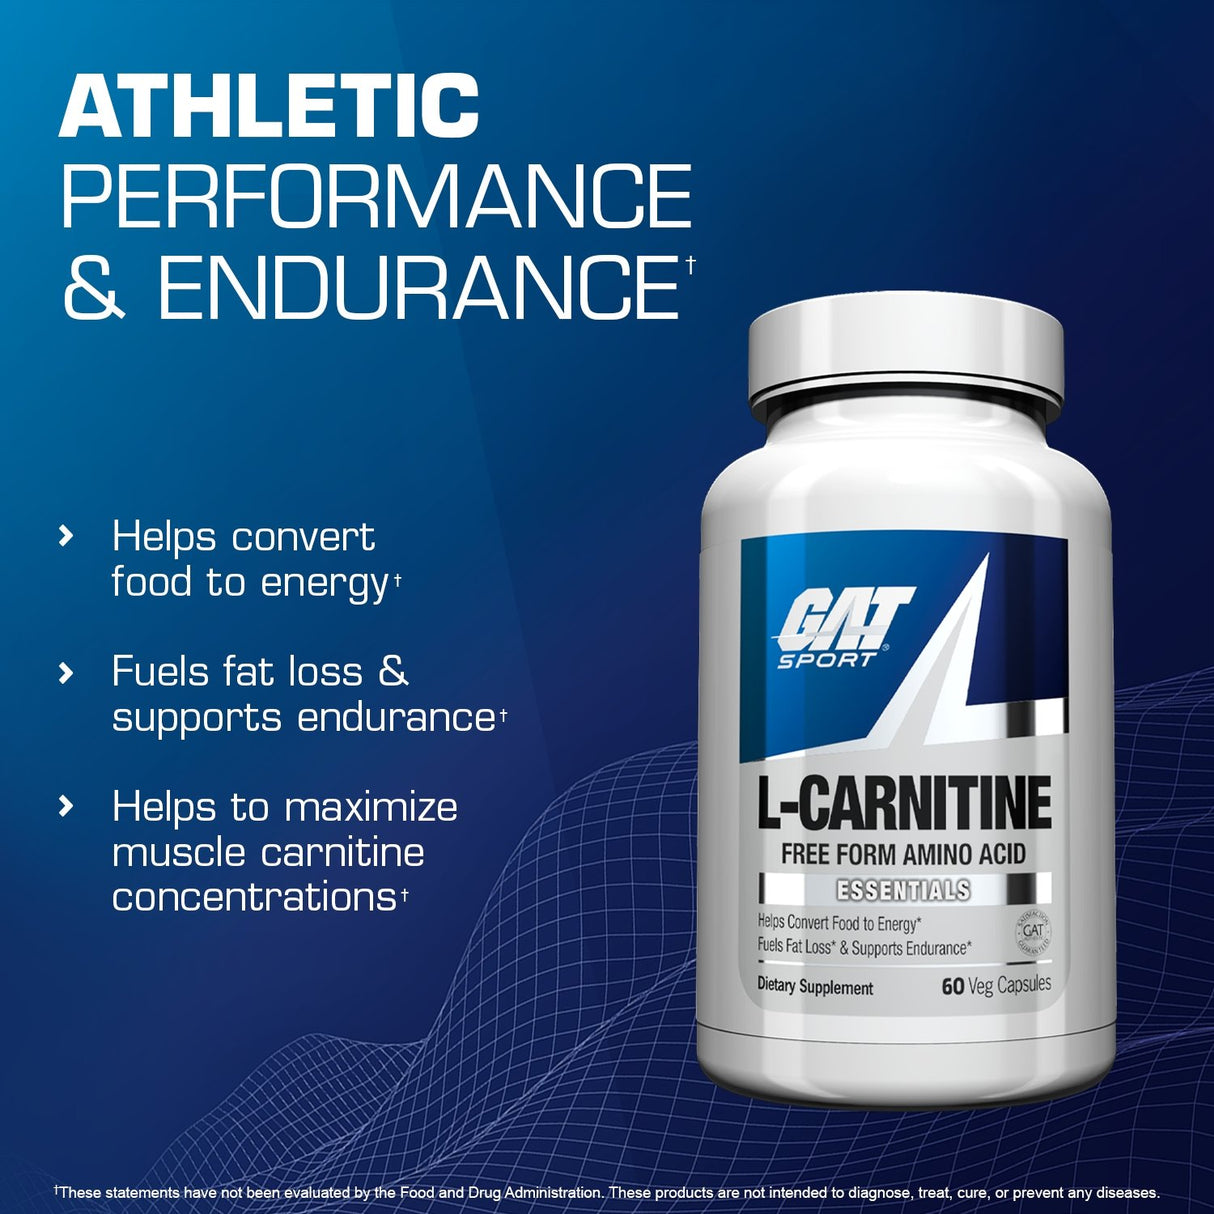 GAT SPORT L-CARNITINE - athletic performance and endurance